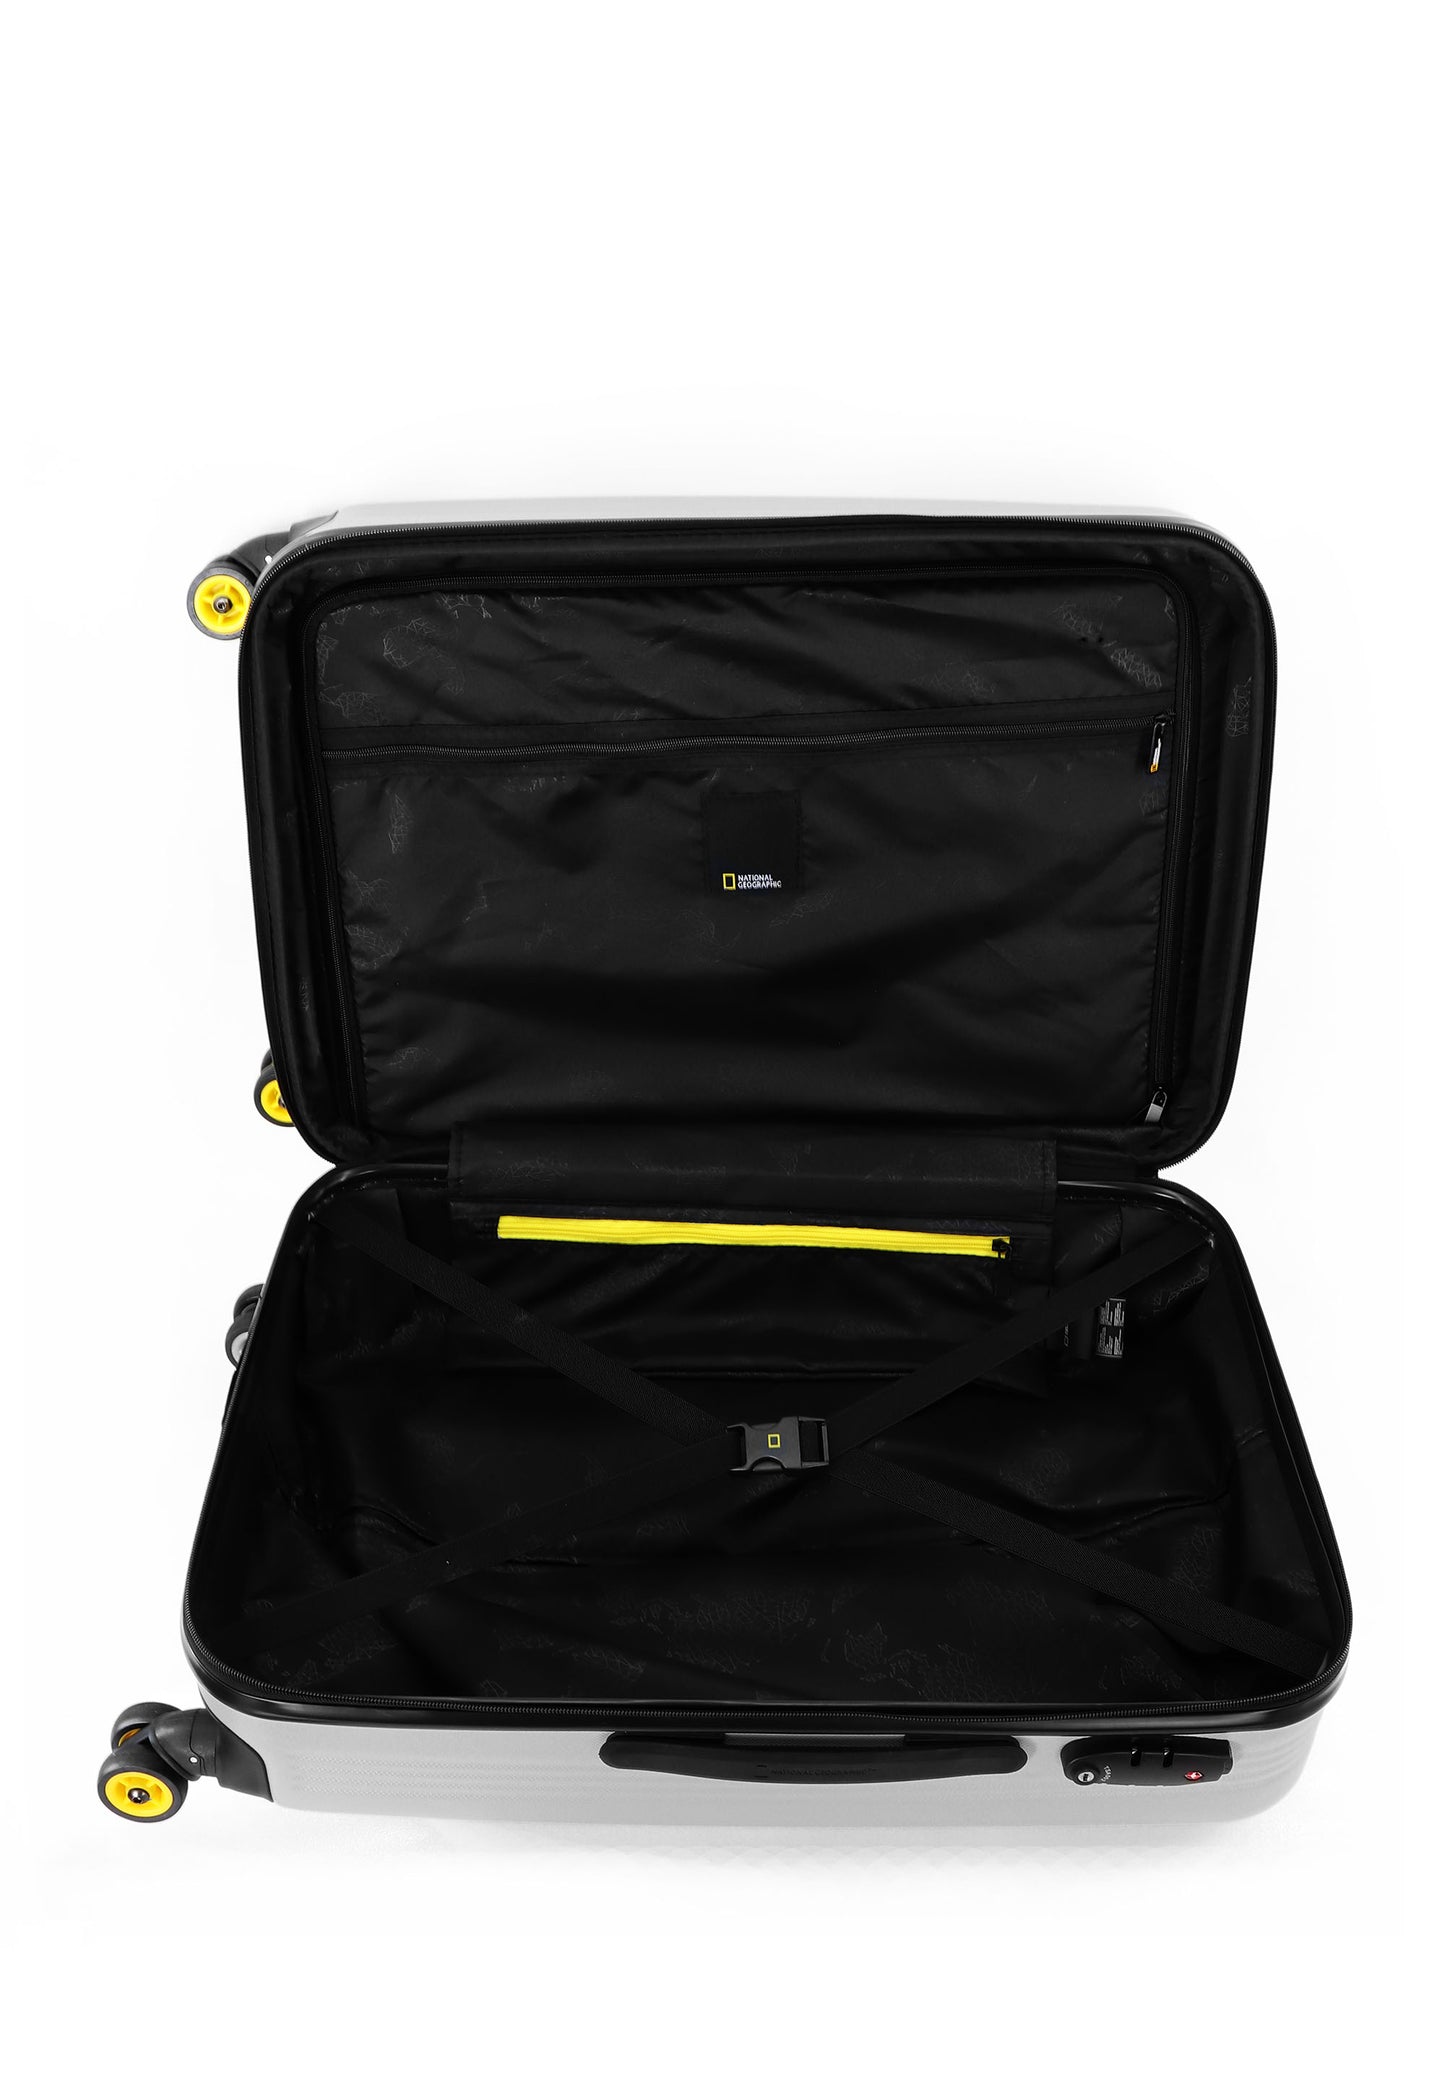 National Geographic Hard Case / Trolley / Travel Case - 67 cm (Moyen) - Aerodrome - Argent